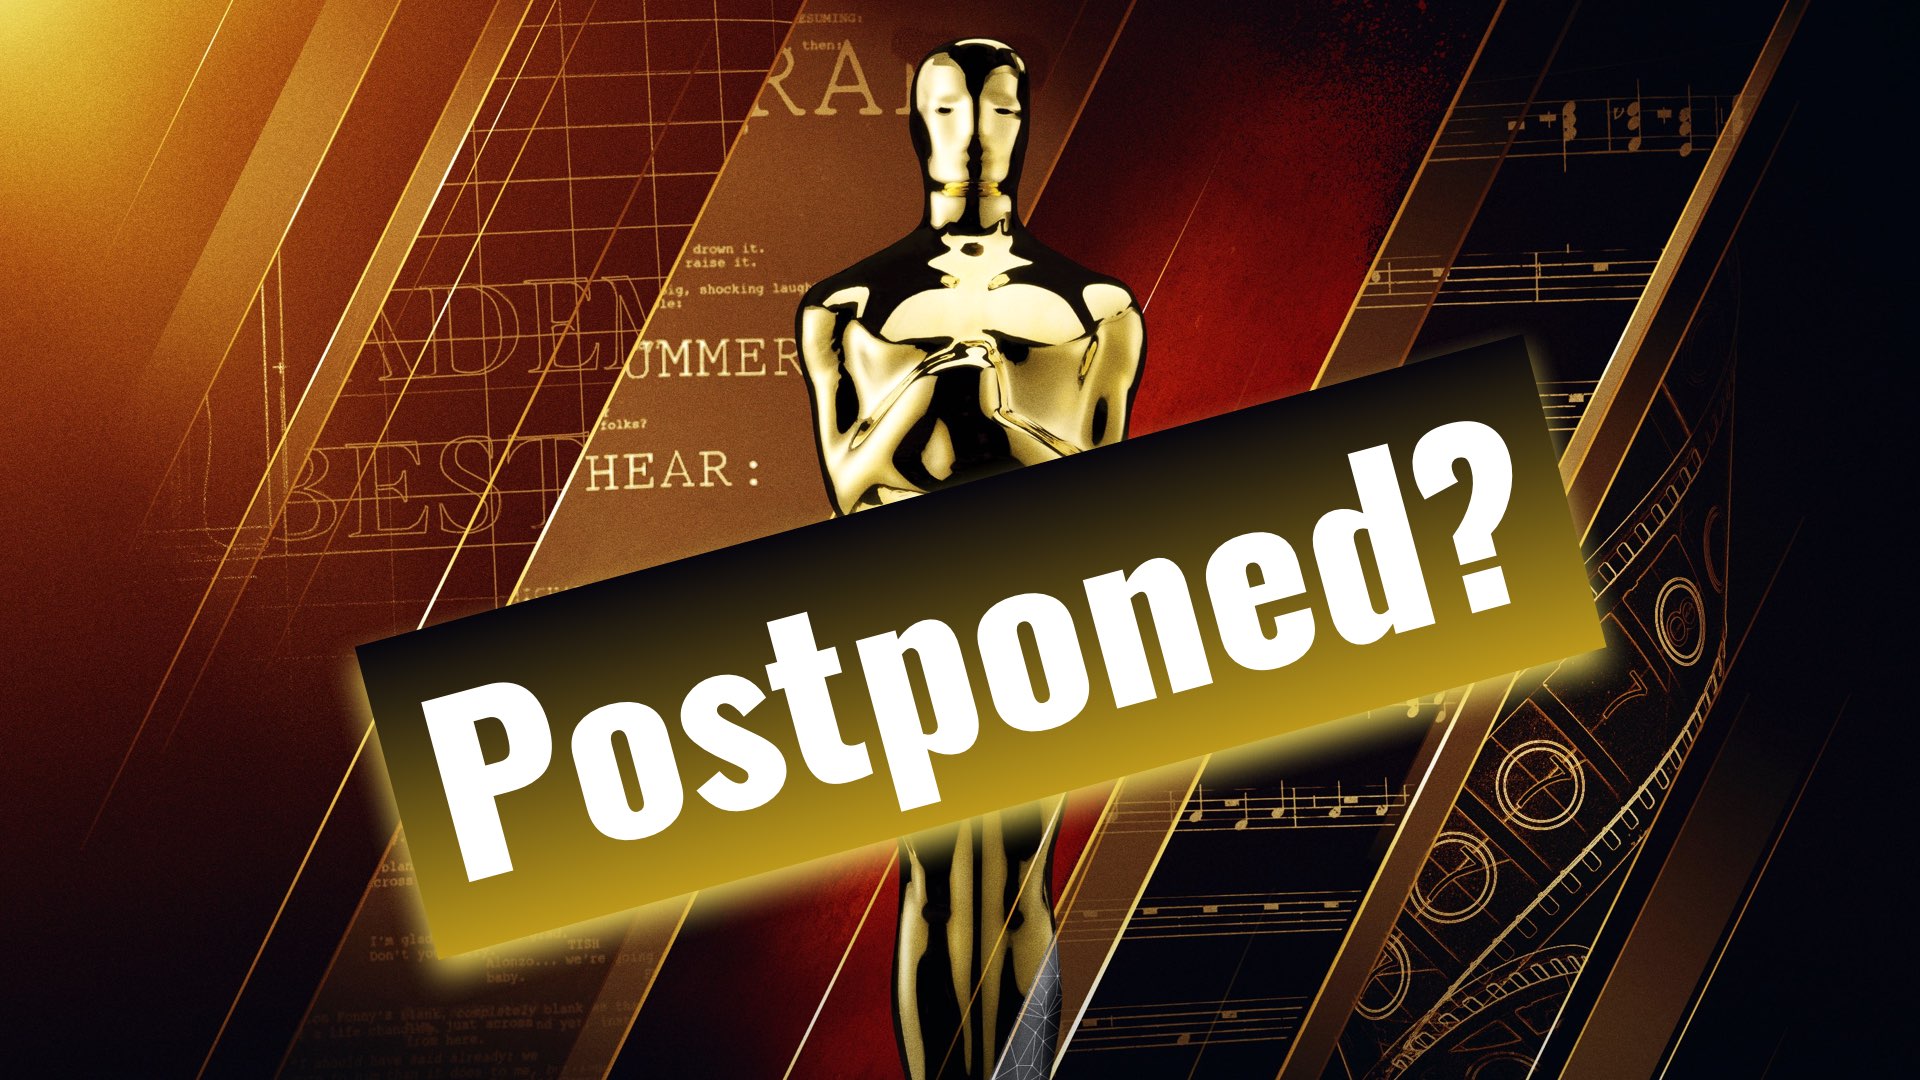 Oscar 2021 Might be Postponed